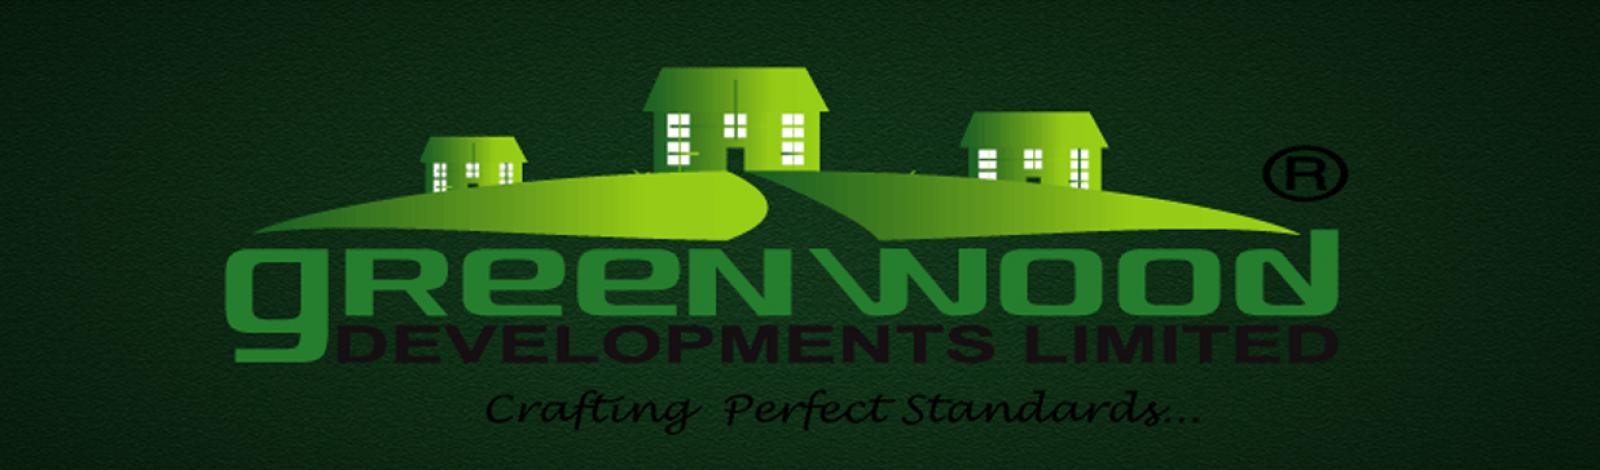 Greenwood Development Ltd banner